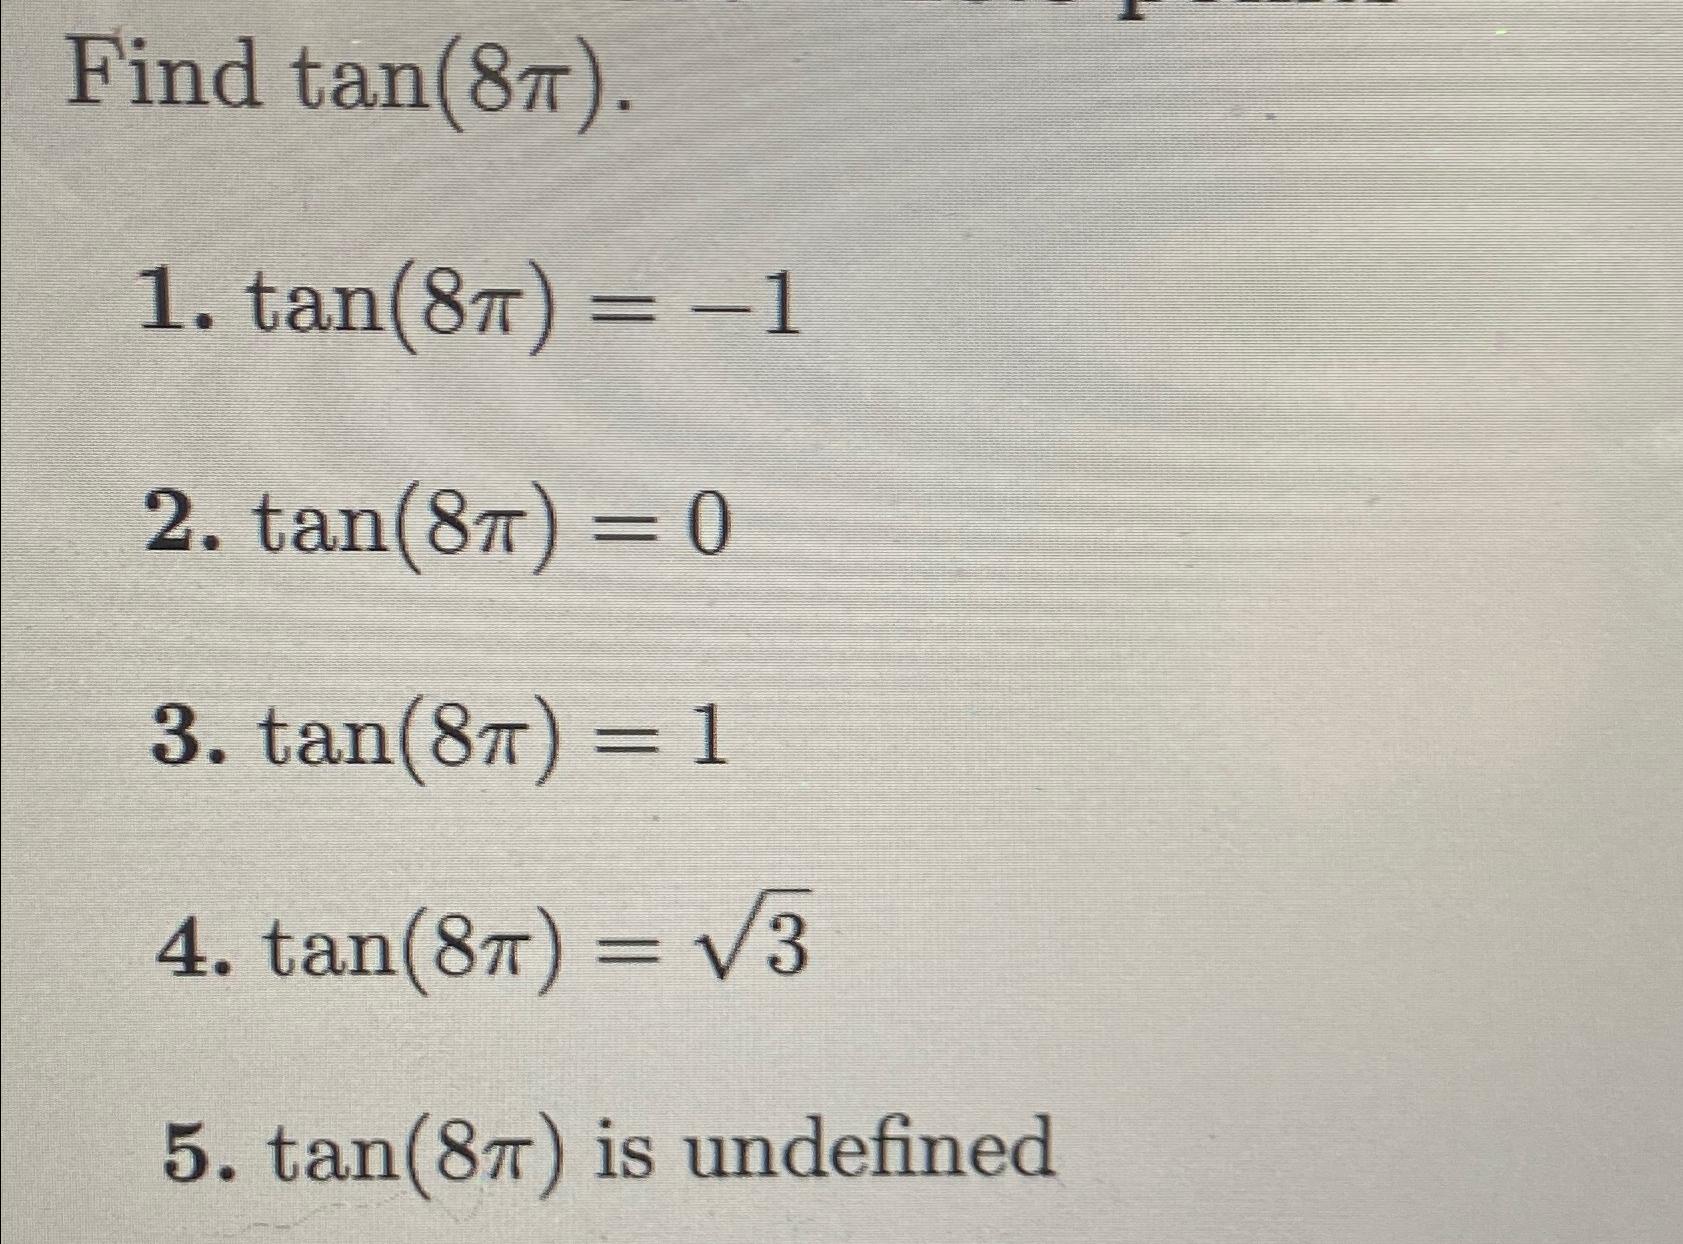 Find tan(87). 1. tan(87) = -1 2. tan(8) = 0 3. tan(87) = 1 4. tan(8) = 3 5. tan(87) is undefined